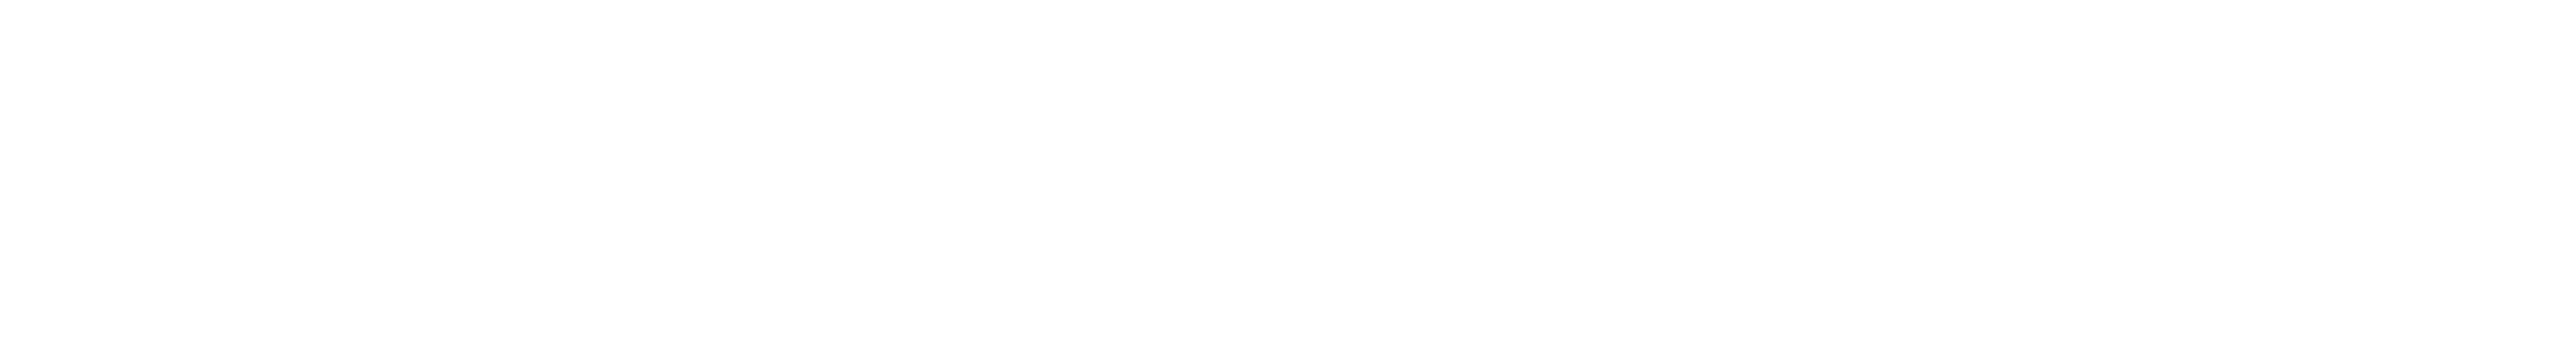 LECHAPPEE logo lettrage blanc 1